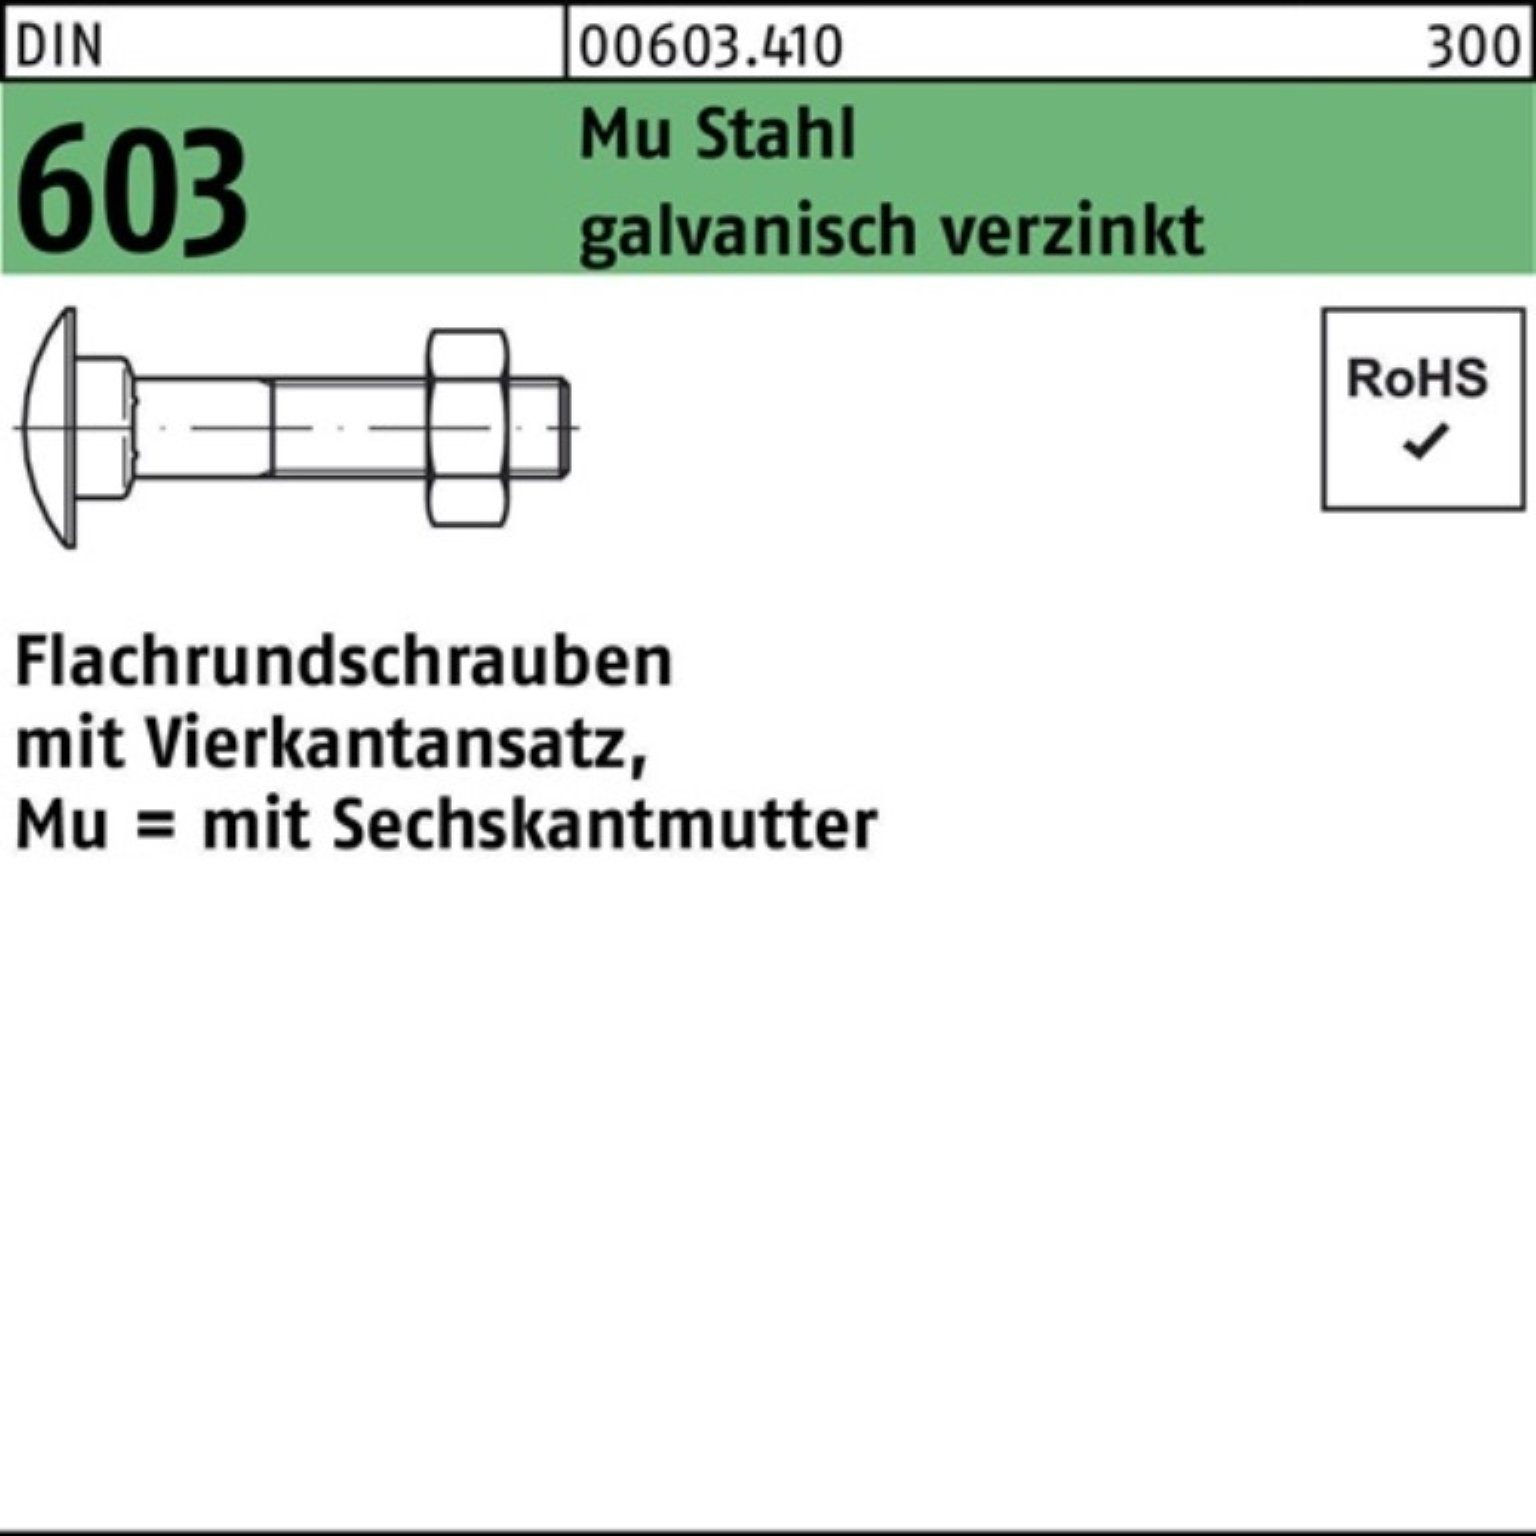 Reyher Schraube 500er DIN M6x30 Vierkantansatz/6-ktmutter Flachrundschraube Pack 603 M